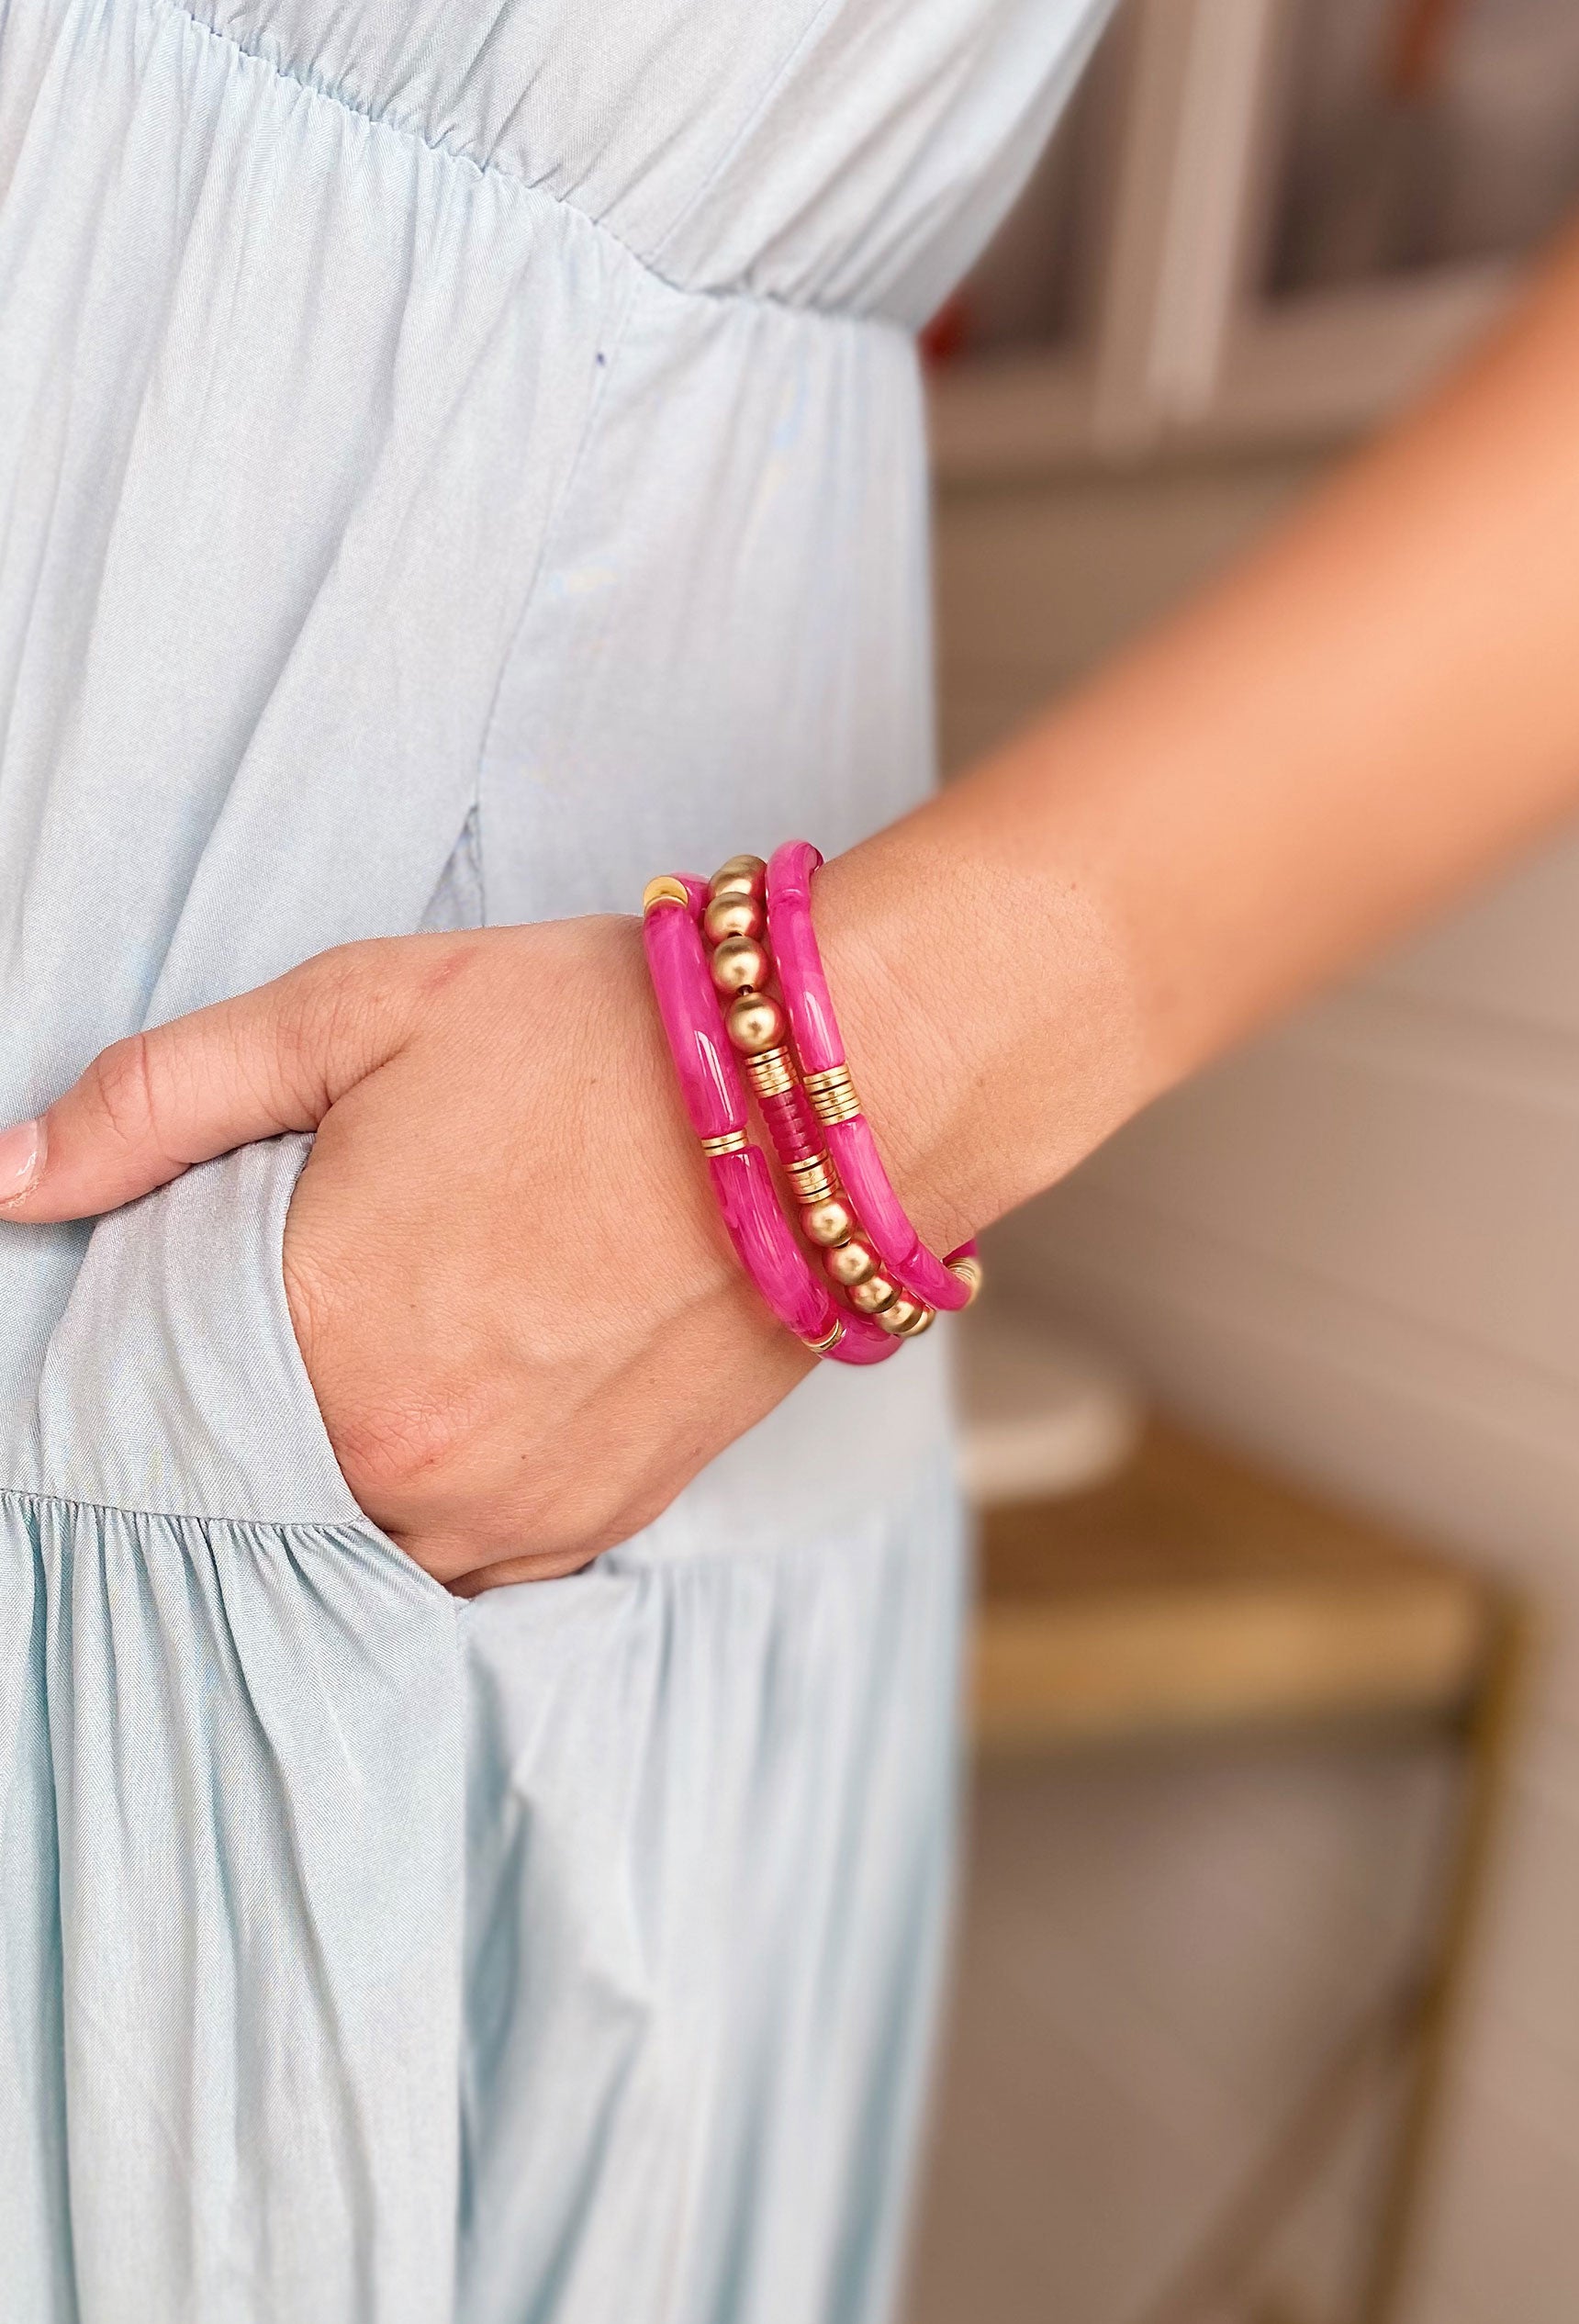 Island Beauty Acrylic Bracelet Set in Pink, hot pink acrylic bracelets, gold beads mixed in